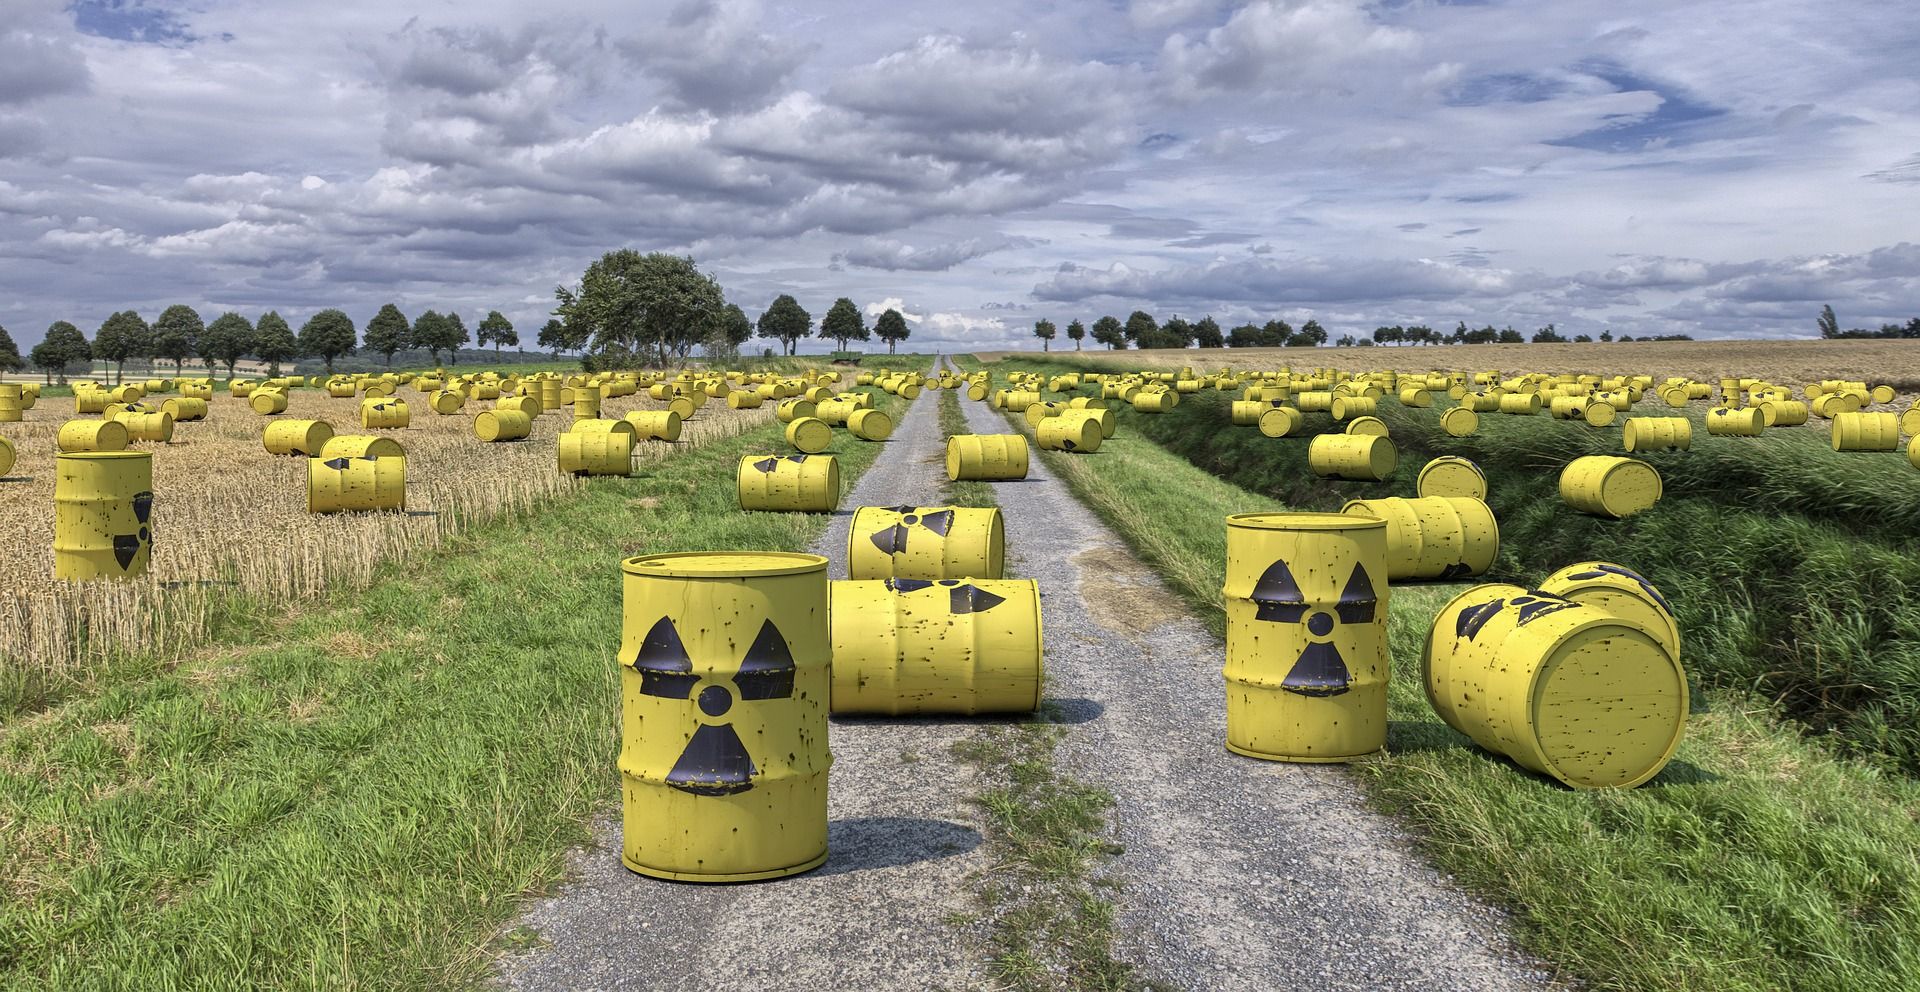 residus radioactius - pixabay